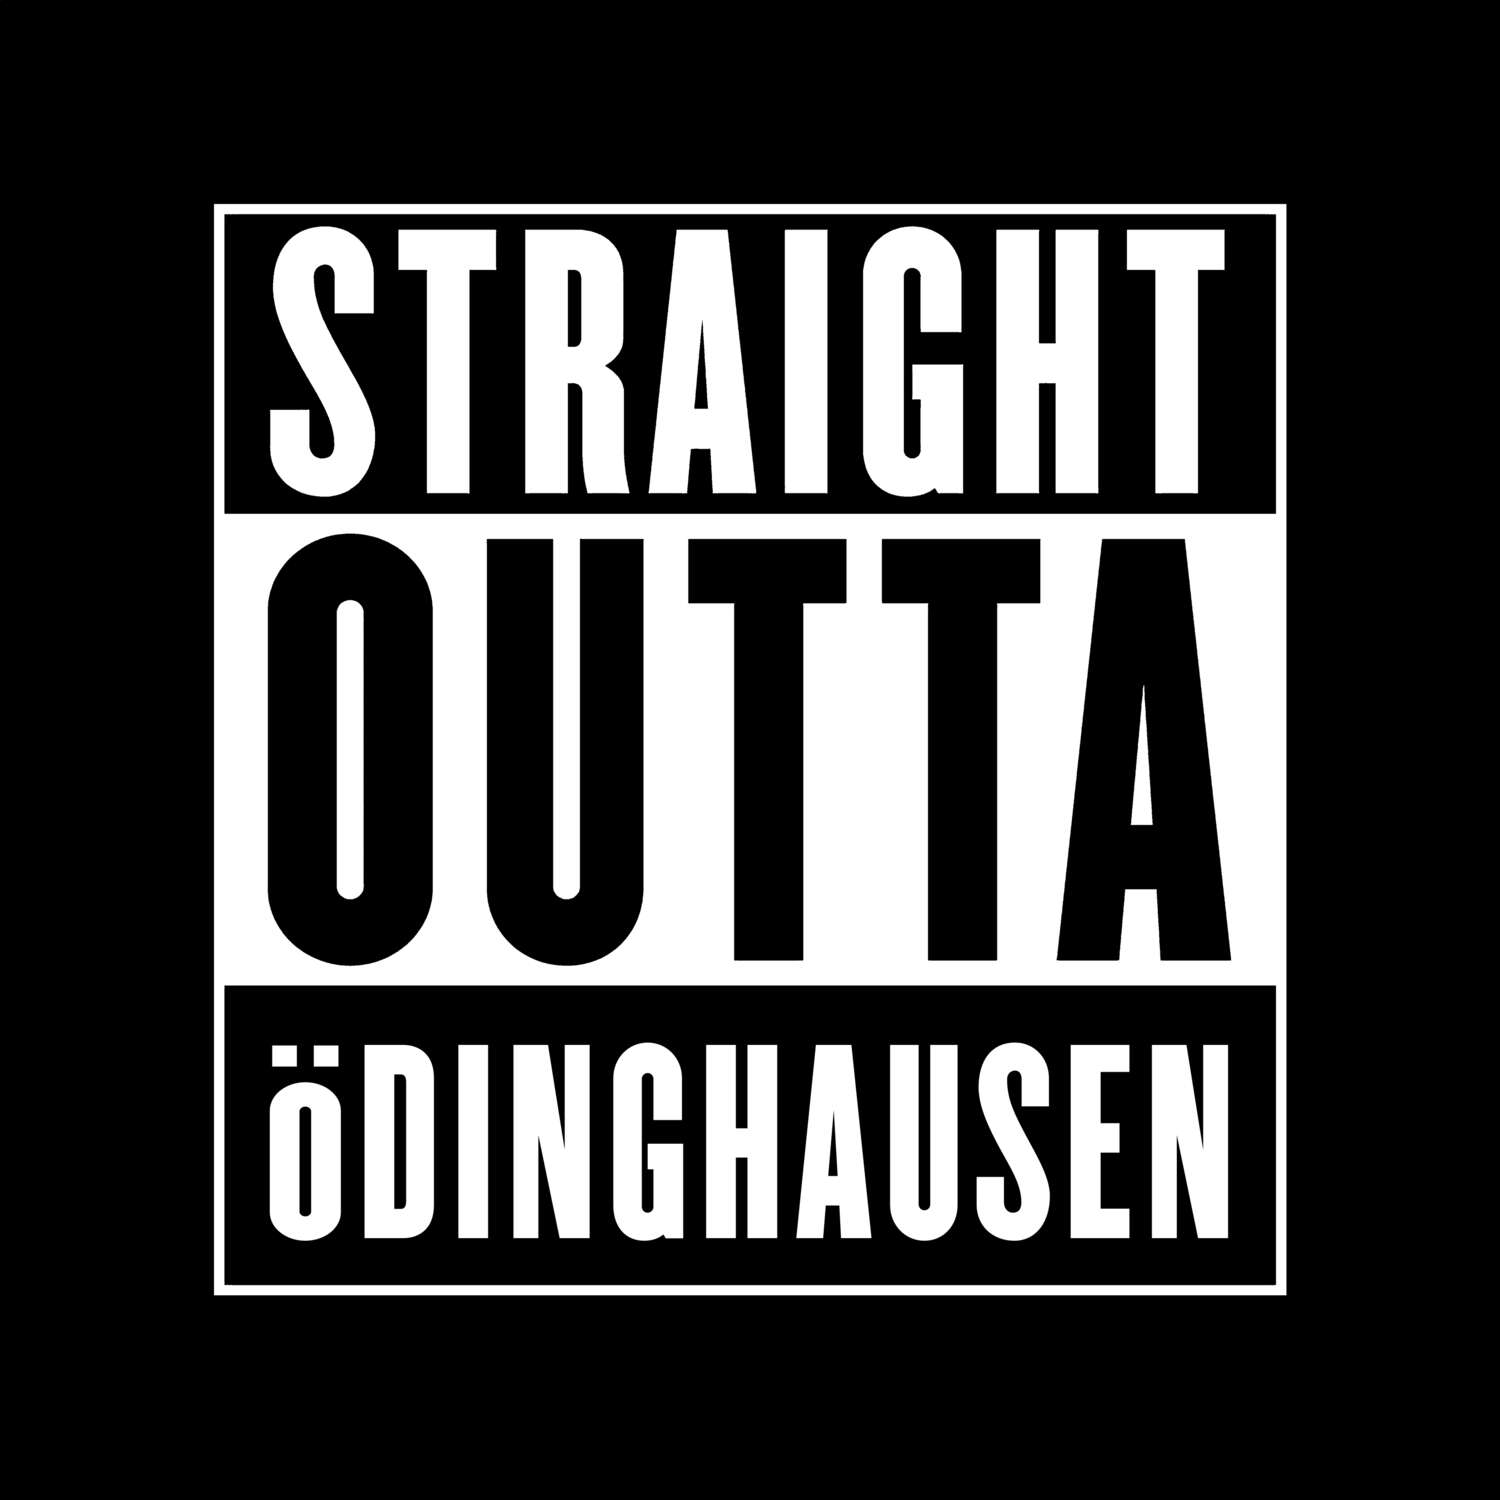 Ödinghausen T-Shirt »Straight Outta«